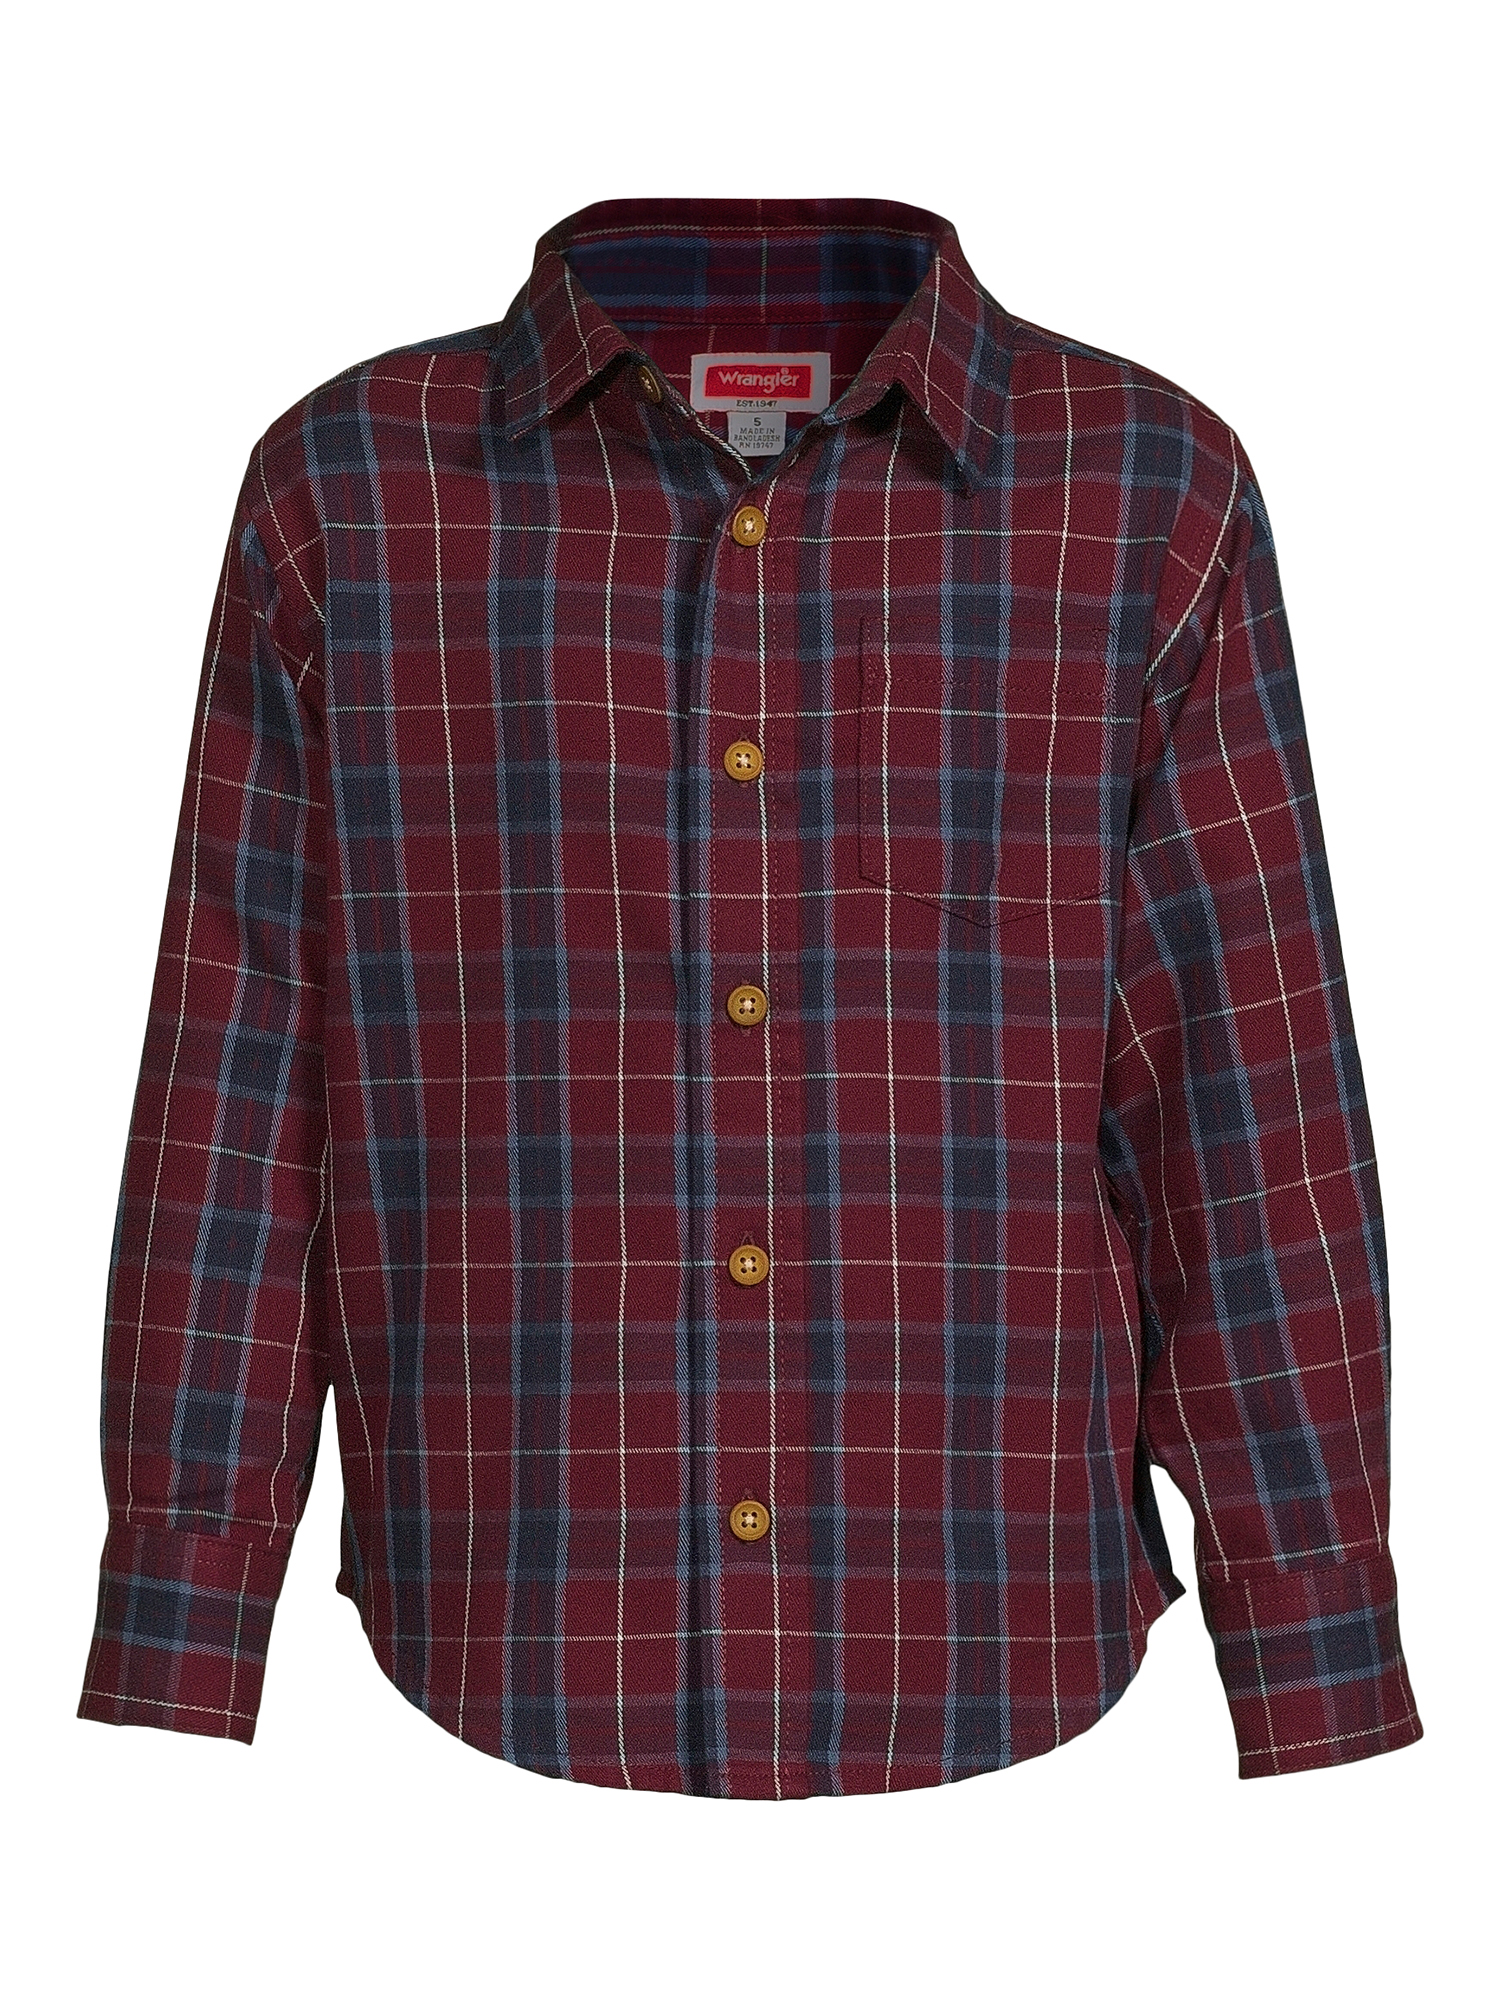 Wrangler Boys Long Sleeve Button-Up Twill Shirt, Sizes 4-18 & Husky - image 2 of 5